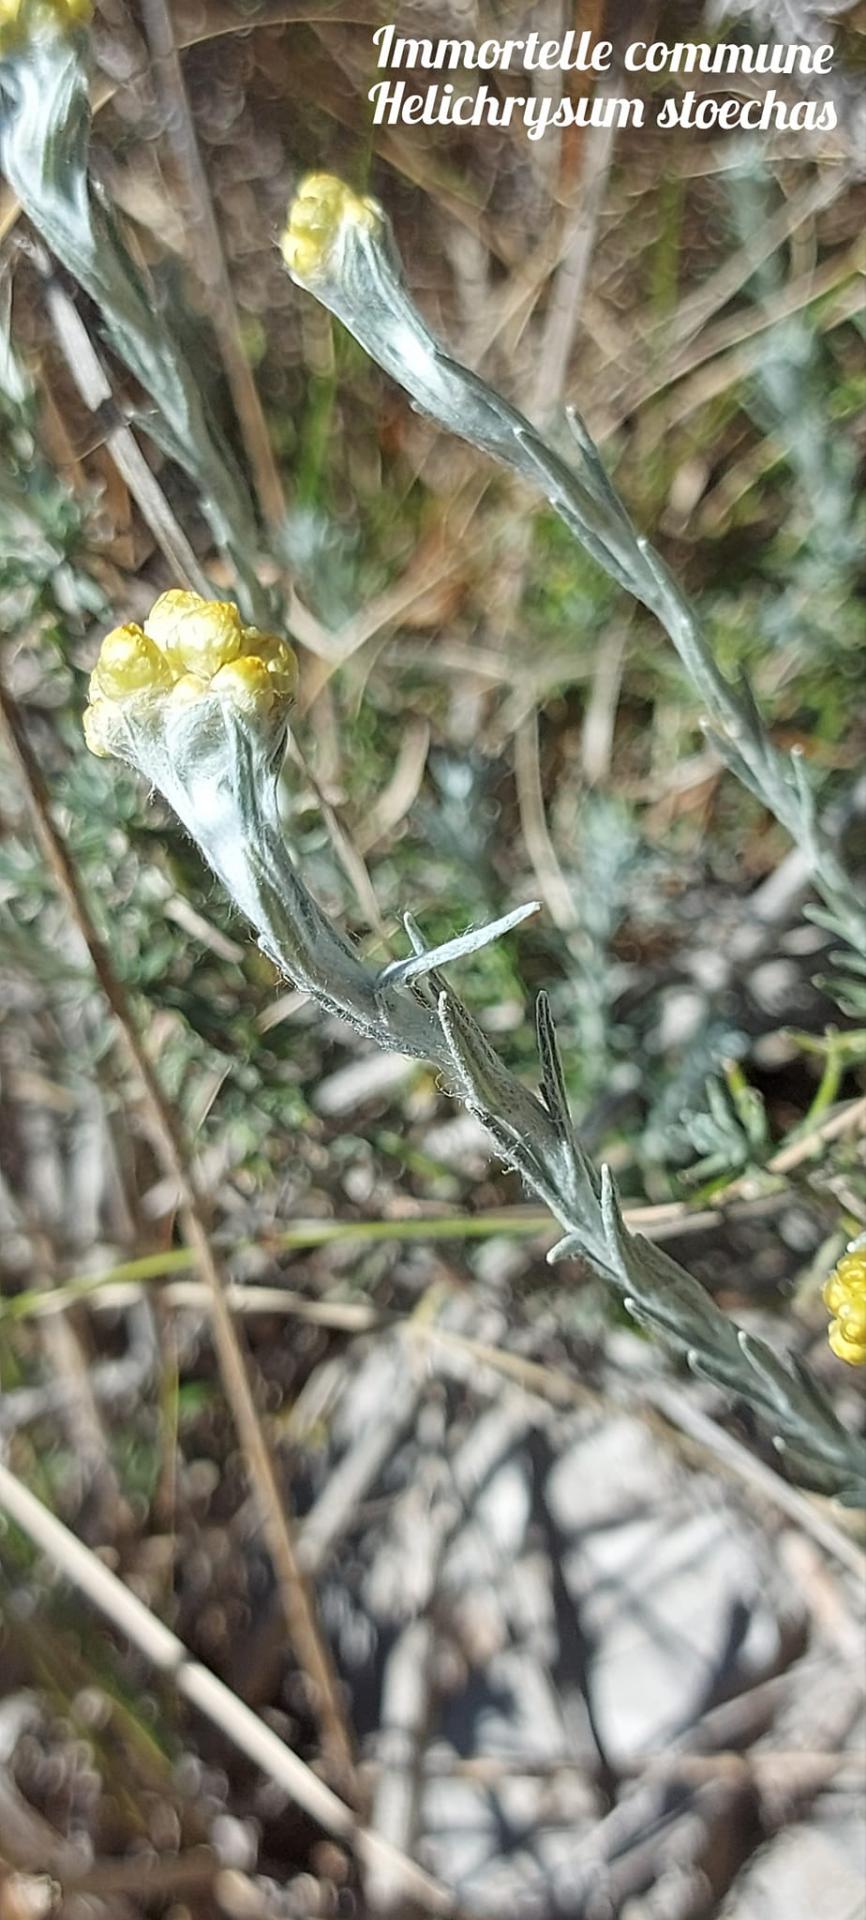 Helichrysum stoechas 2 03 05 23